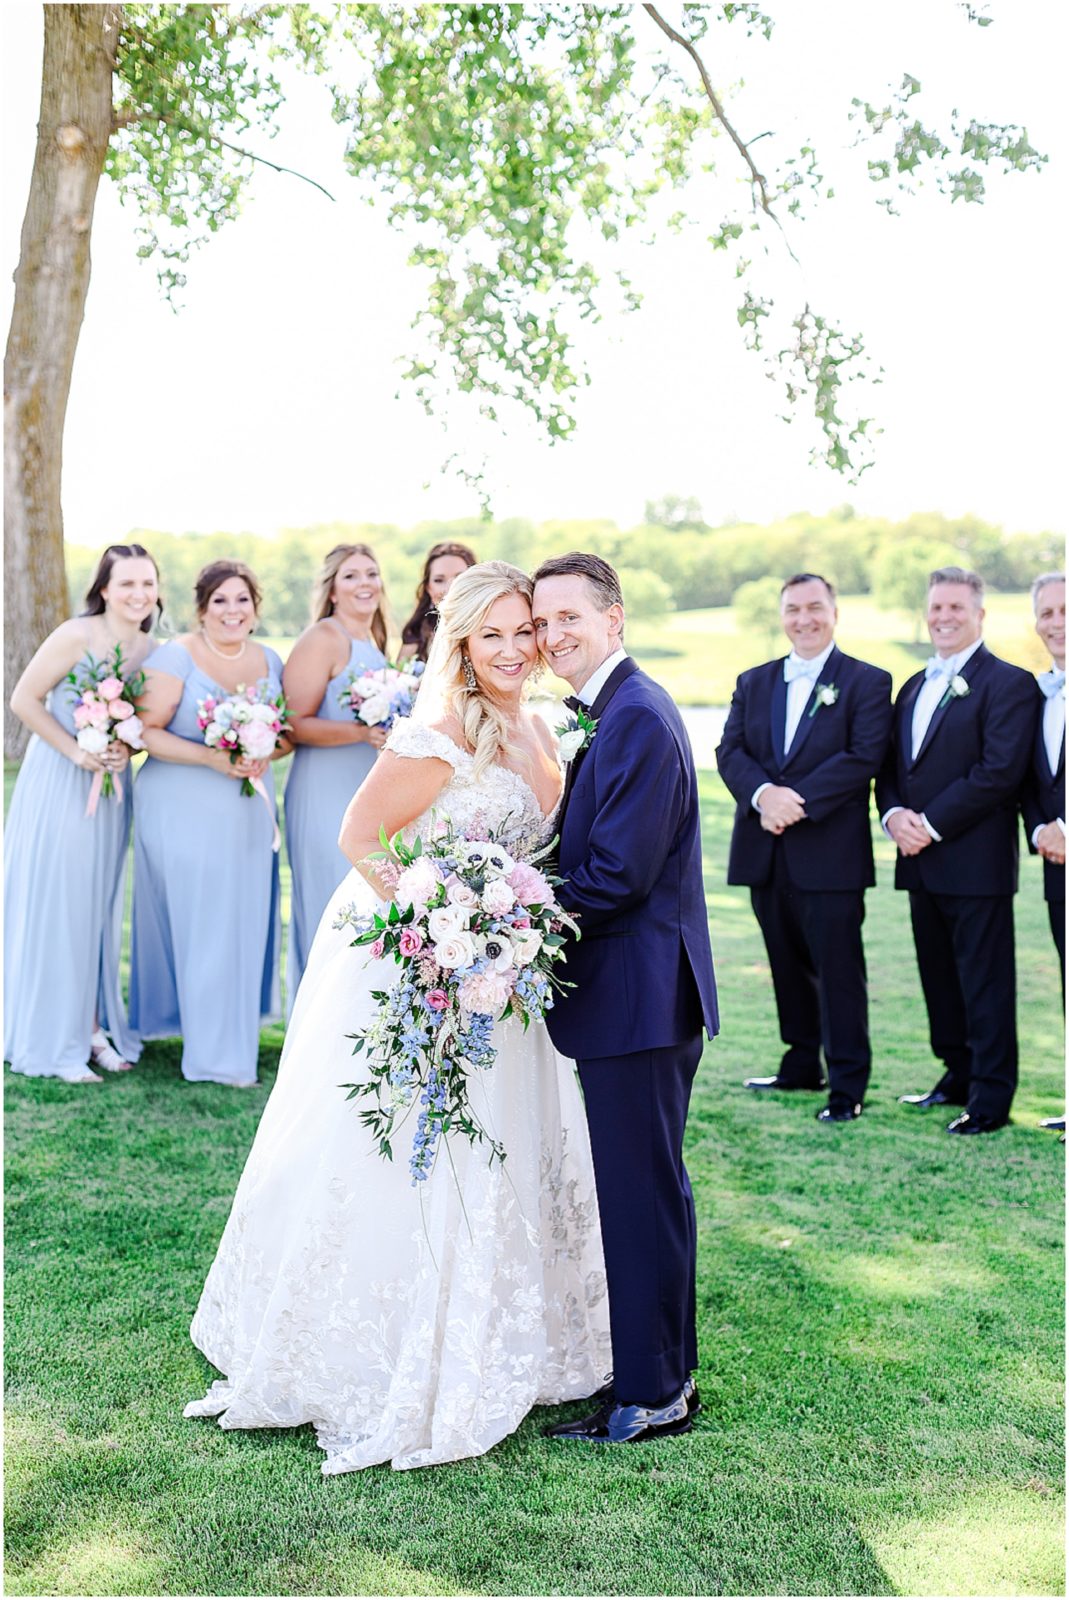 fun bridal party photos - Lake Mozingo Wedding - Kansas City Wedding Photographer - Beautiful Wedding portraits on a golf course - mozingo golf club - bridal party photos - french themed wedding